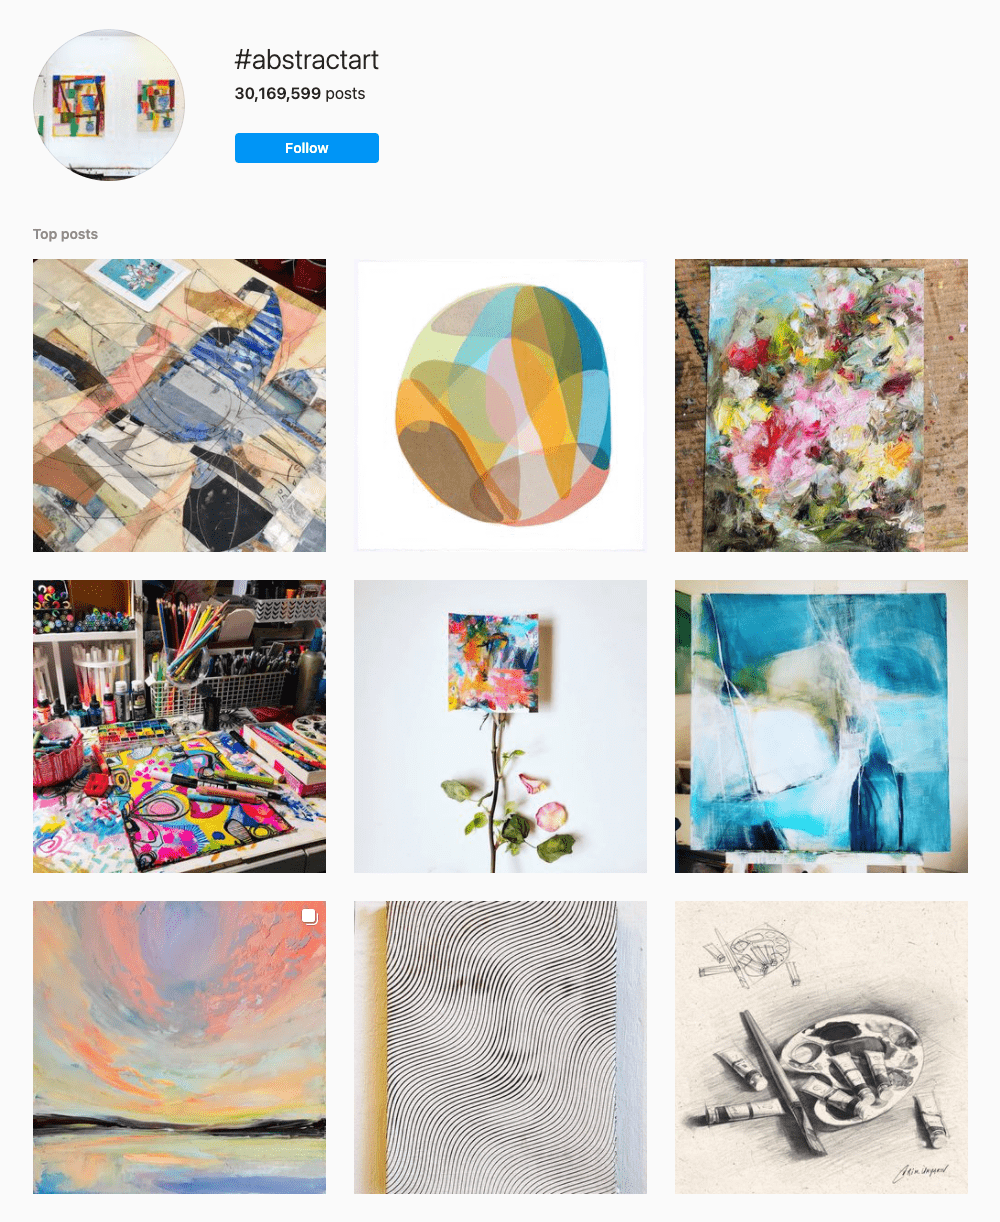 #abstractart Hashtags for Instagram